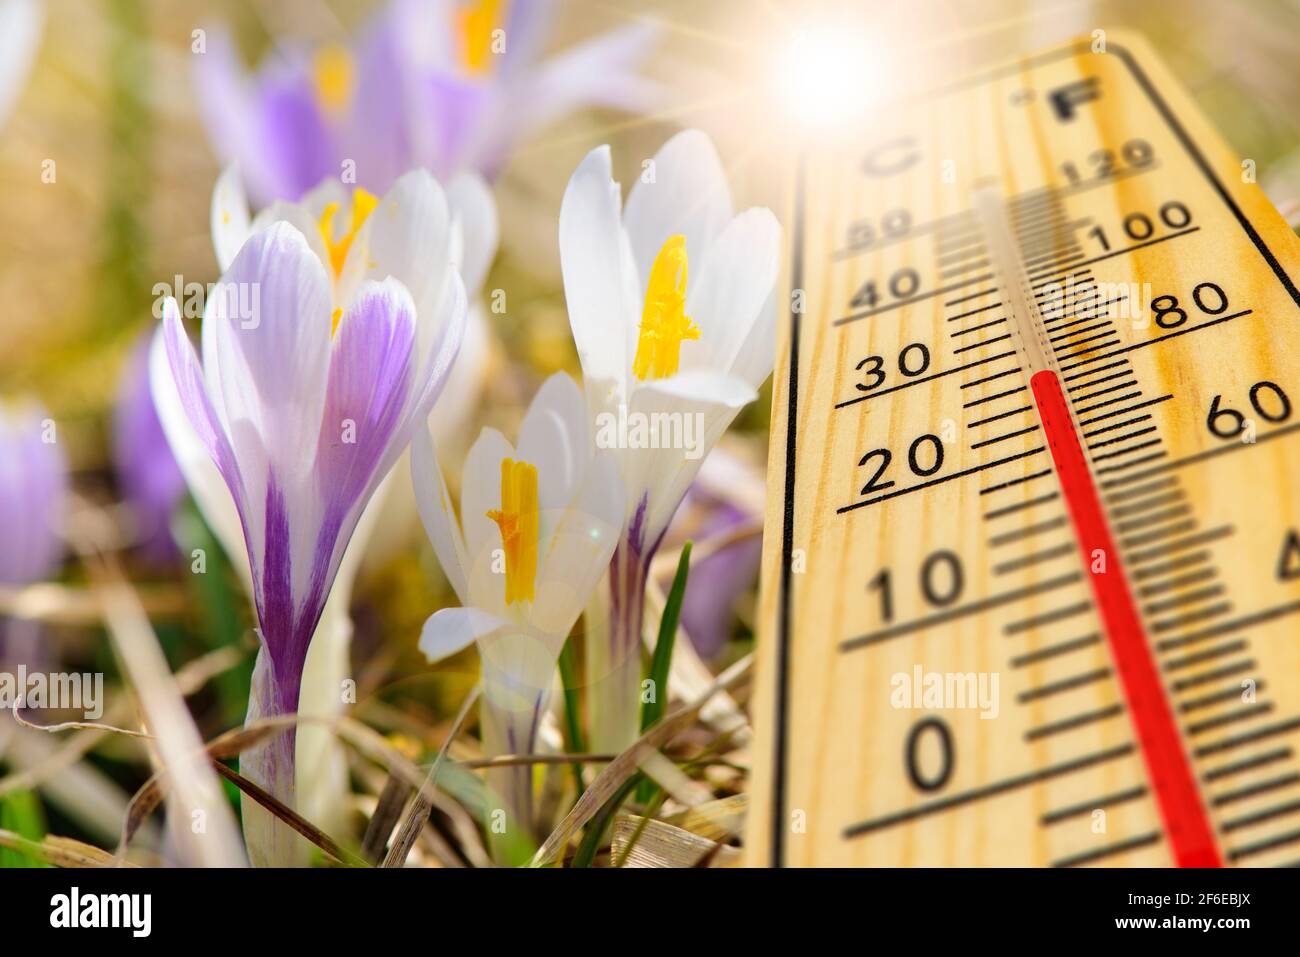 https://c8.alamy.com/comp/2F6EBJX/warm-temperature-on-thermometer-at-springtime-2F6EBJX.jpg